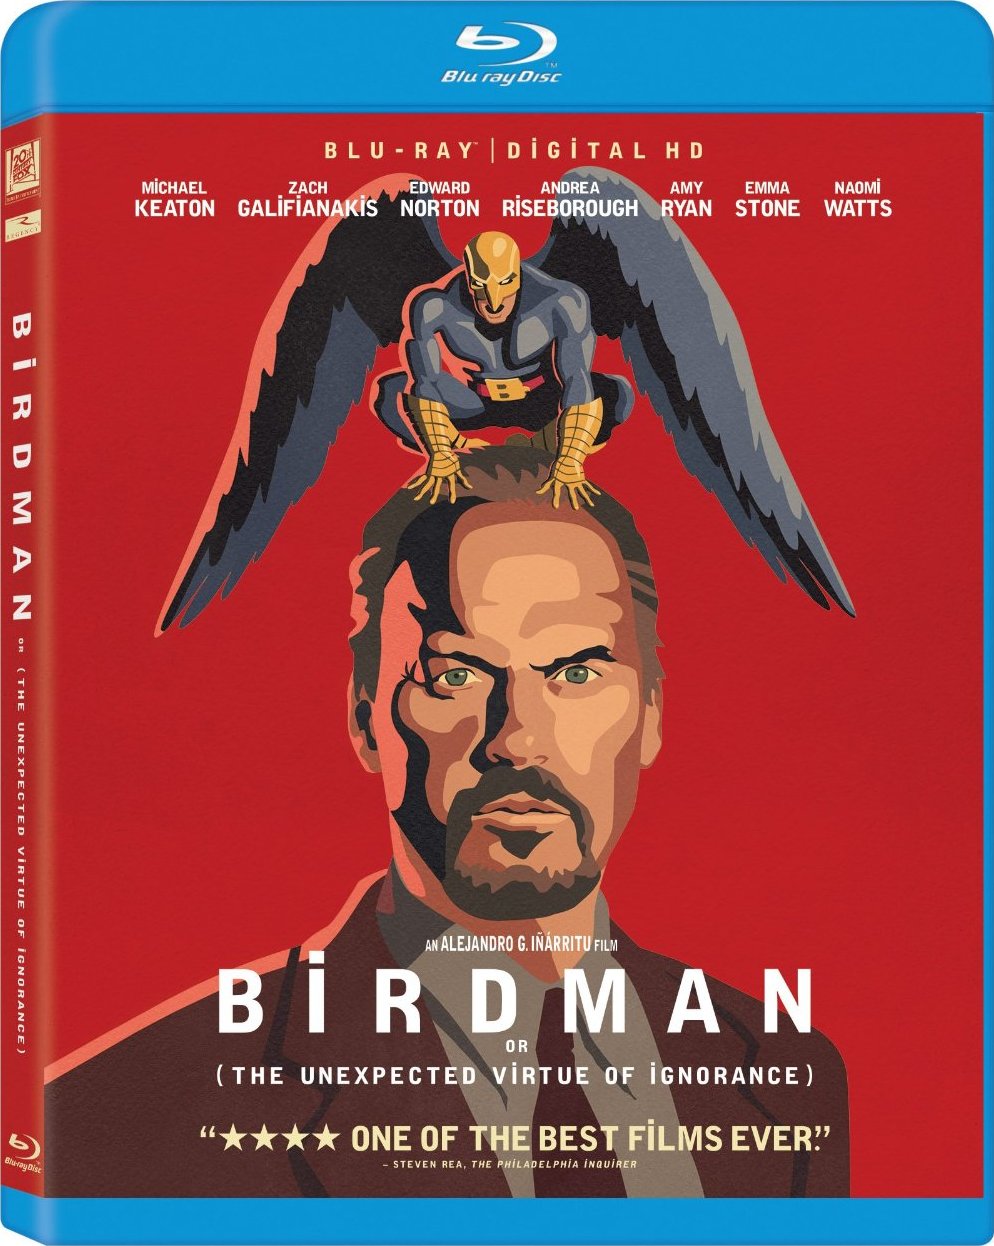 Birdman Blu-ray Review